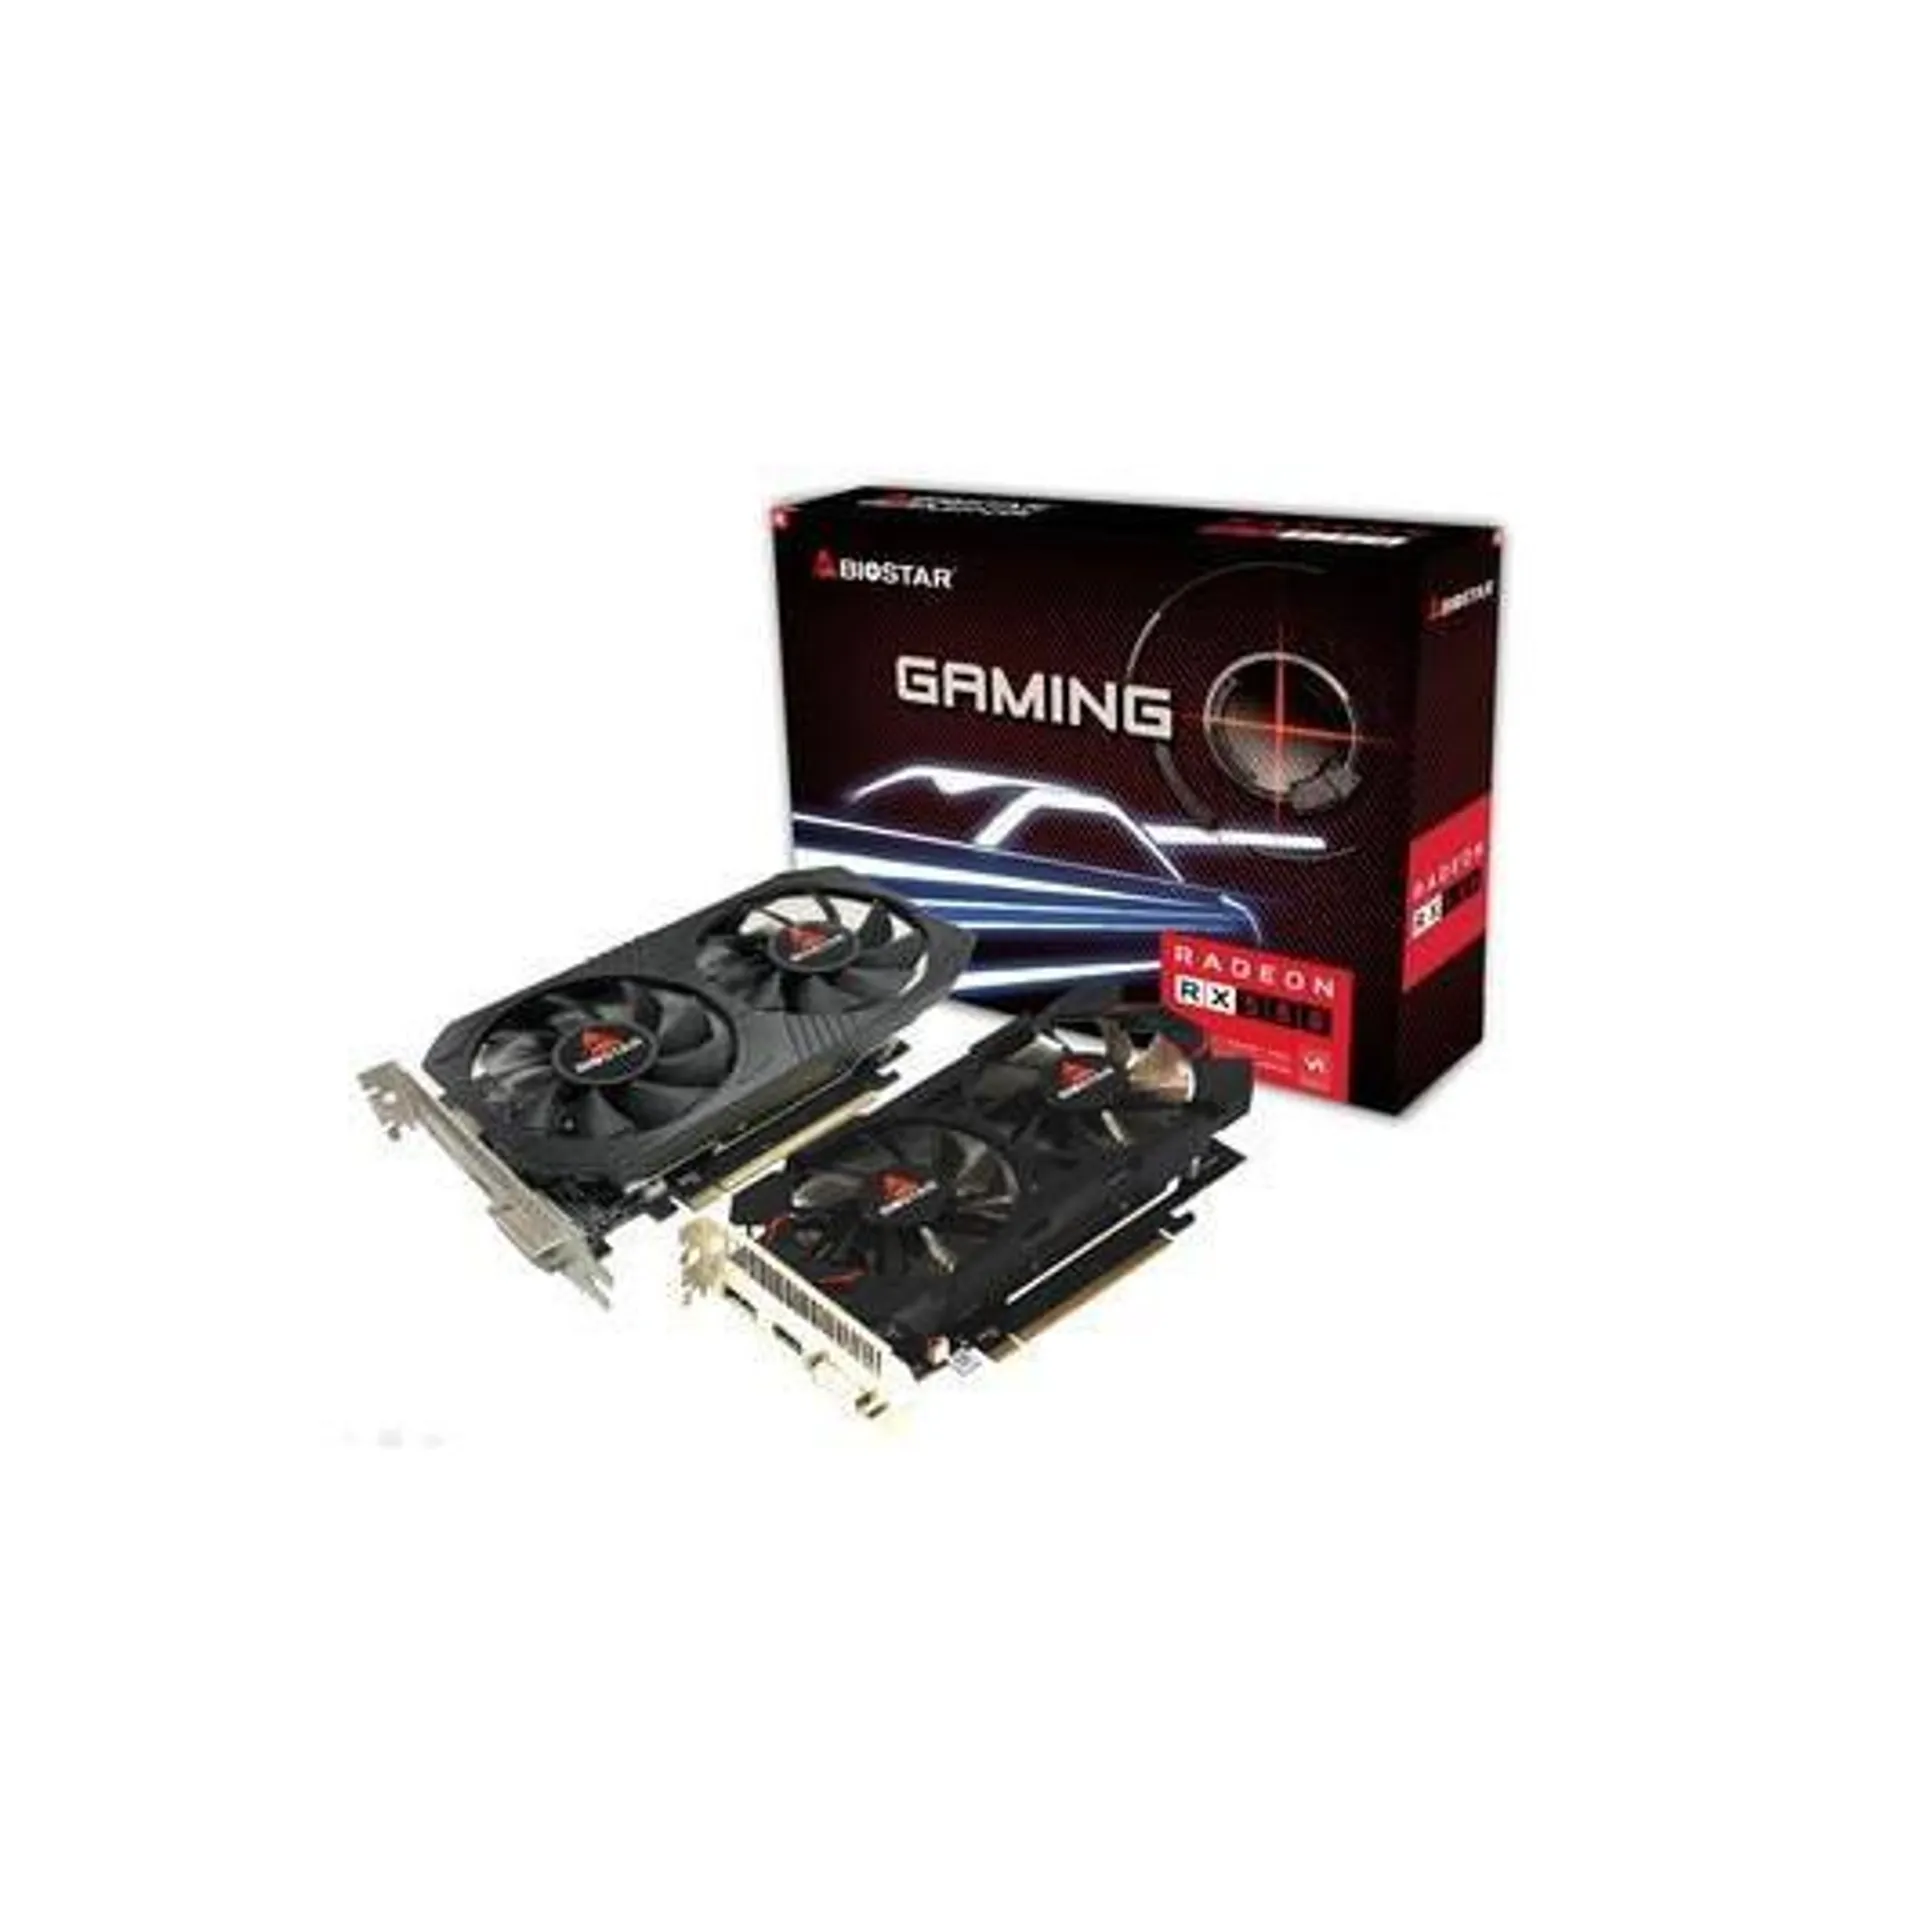 SVGA AMD BIOSTAR RX 560 GPU GAMING 4GB GDDR5